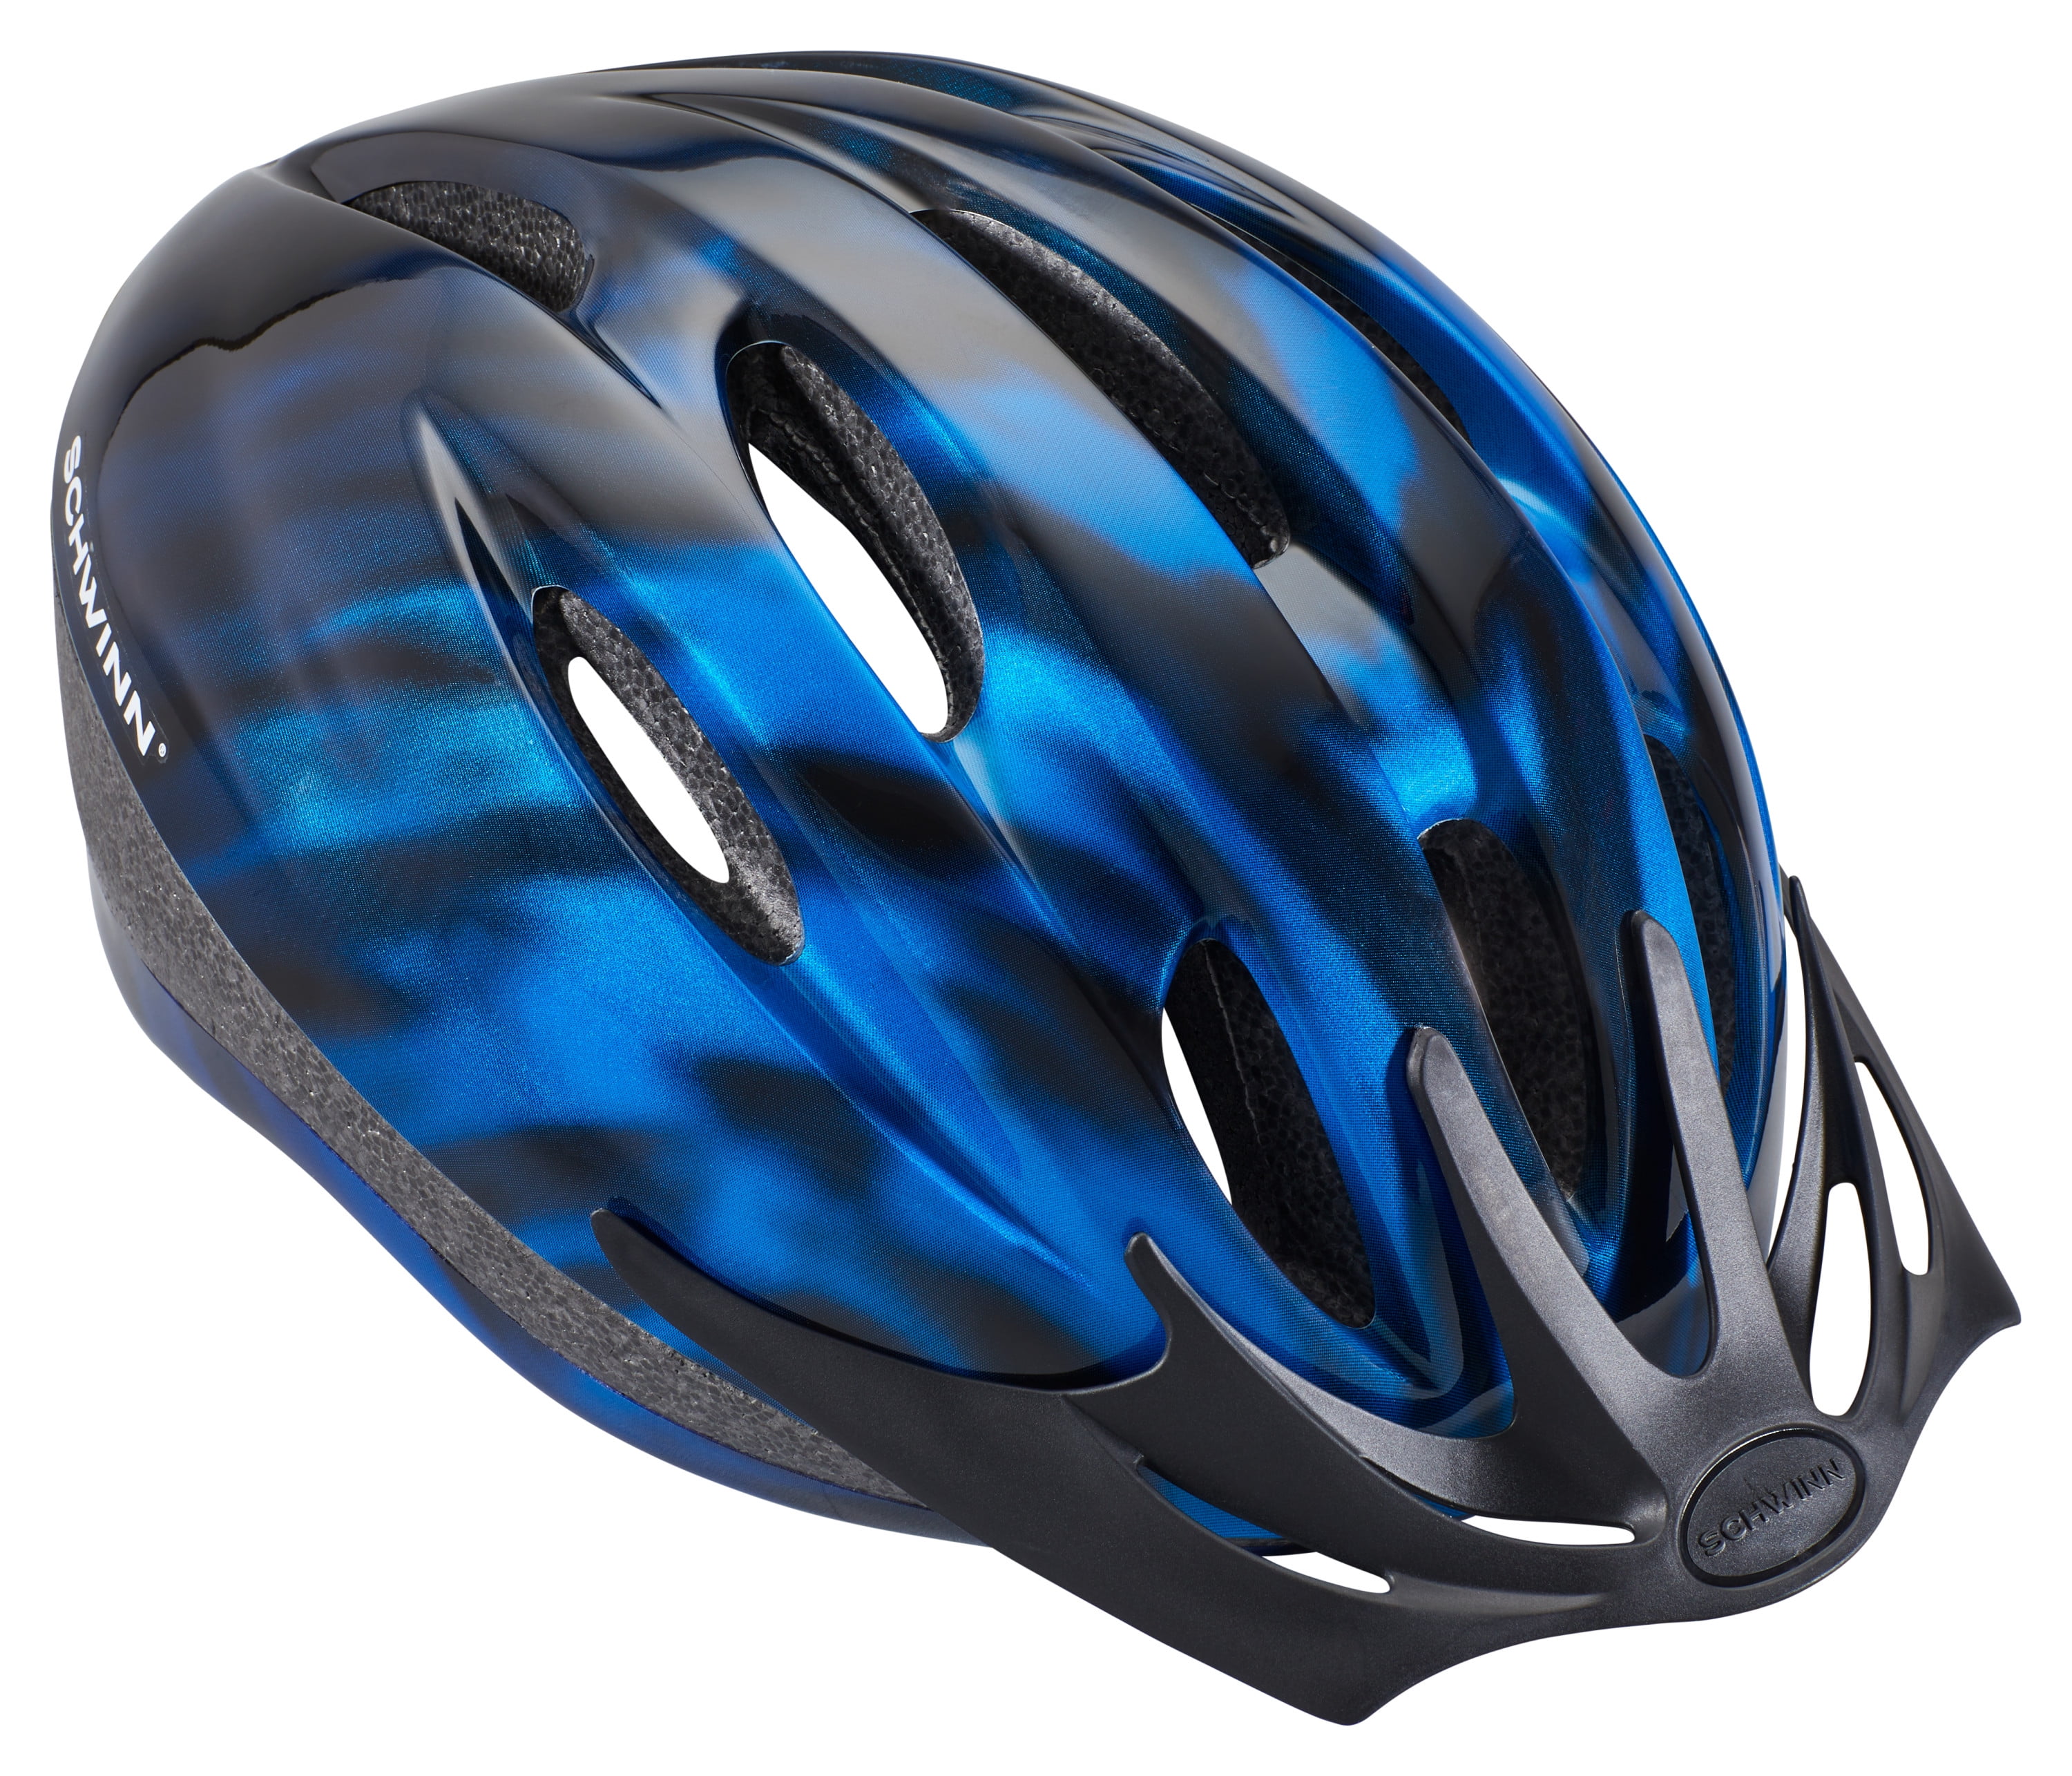 Details about   Schwinn Adult Bike Helmet Intercept Age 14 Blue Adjustable Fit 